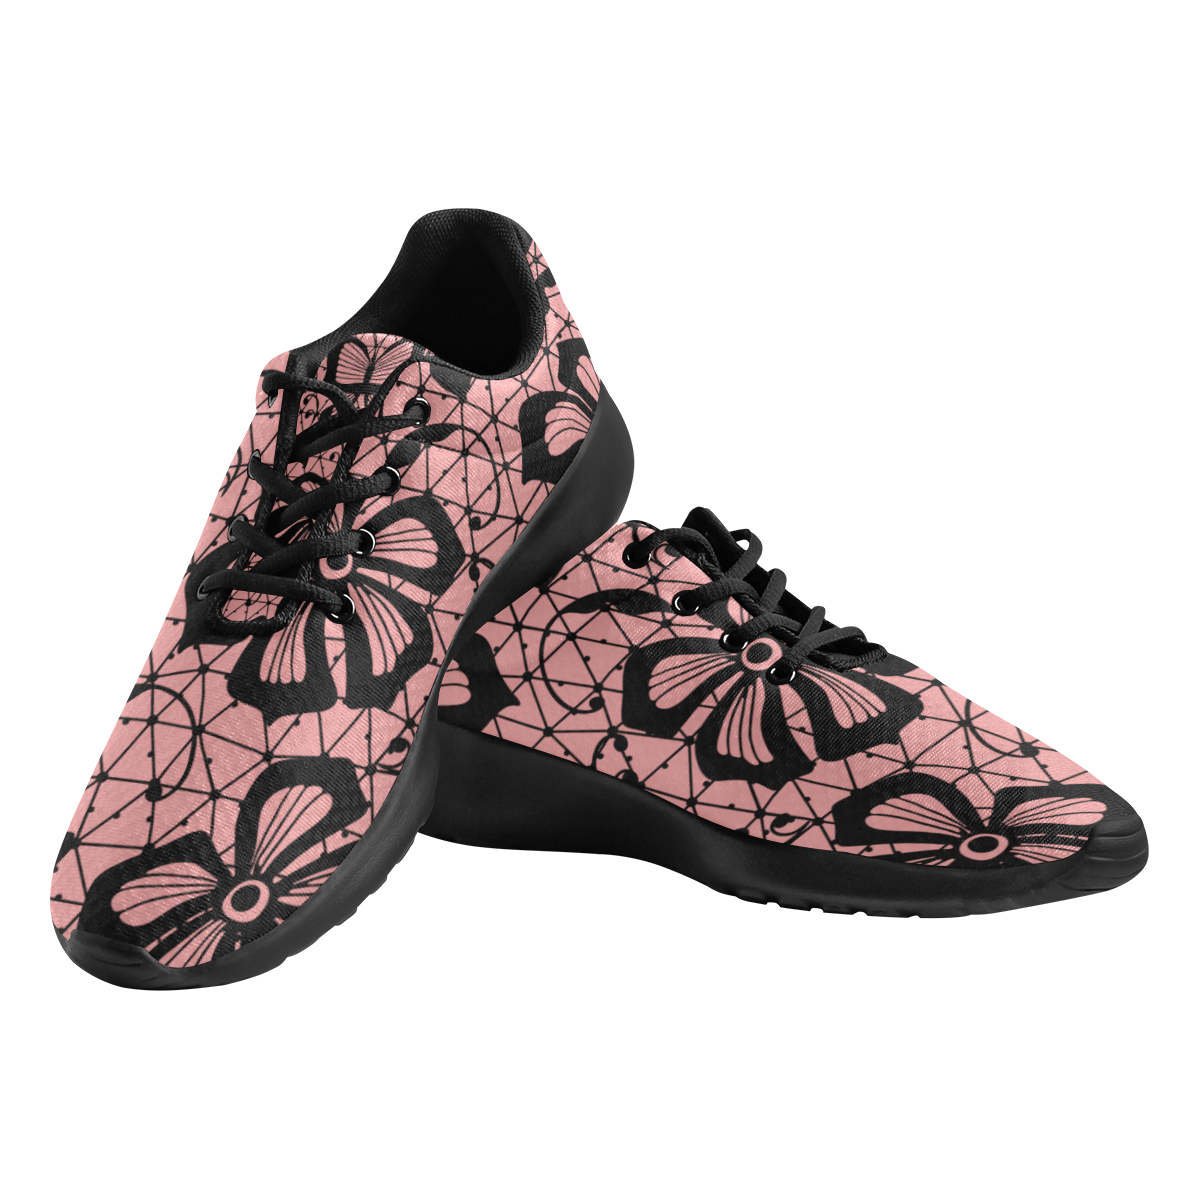 Exquisite Lace Pattern Women's Athletic Shoes (Model 0200)